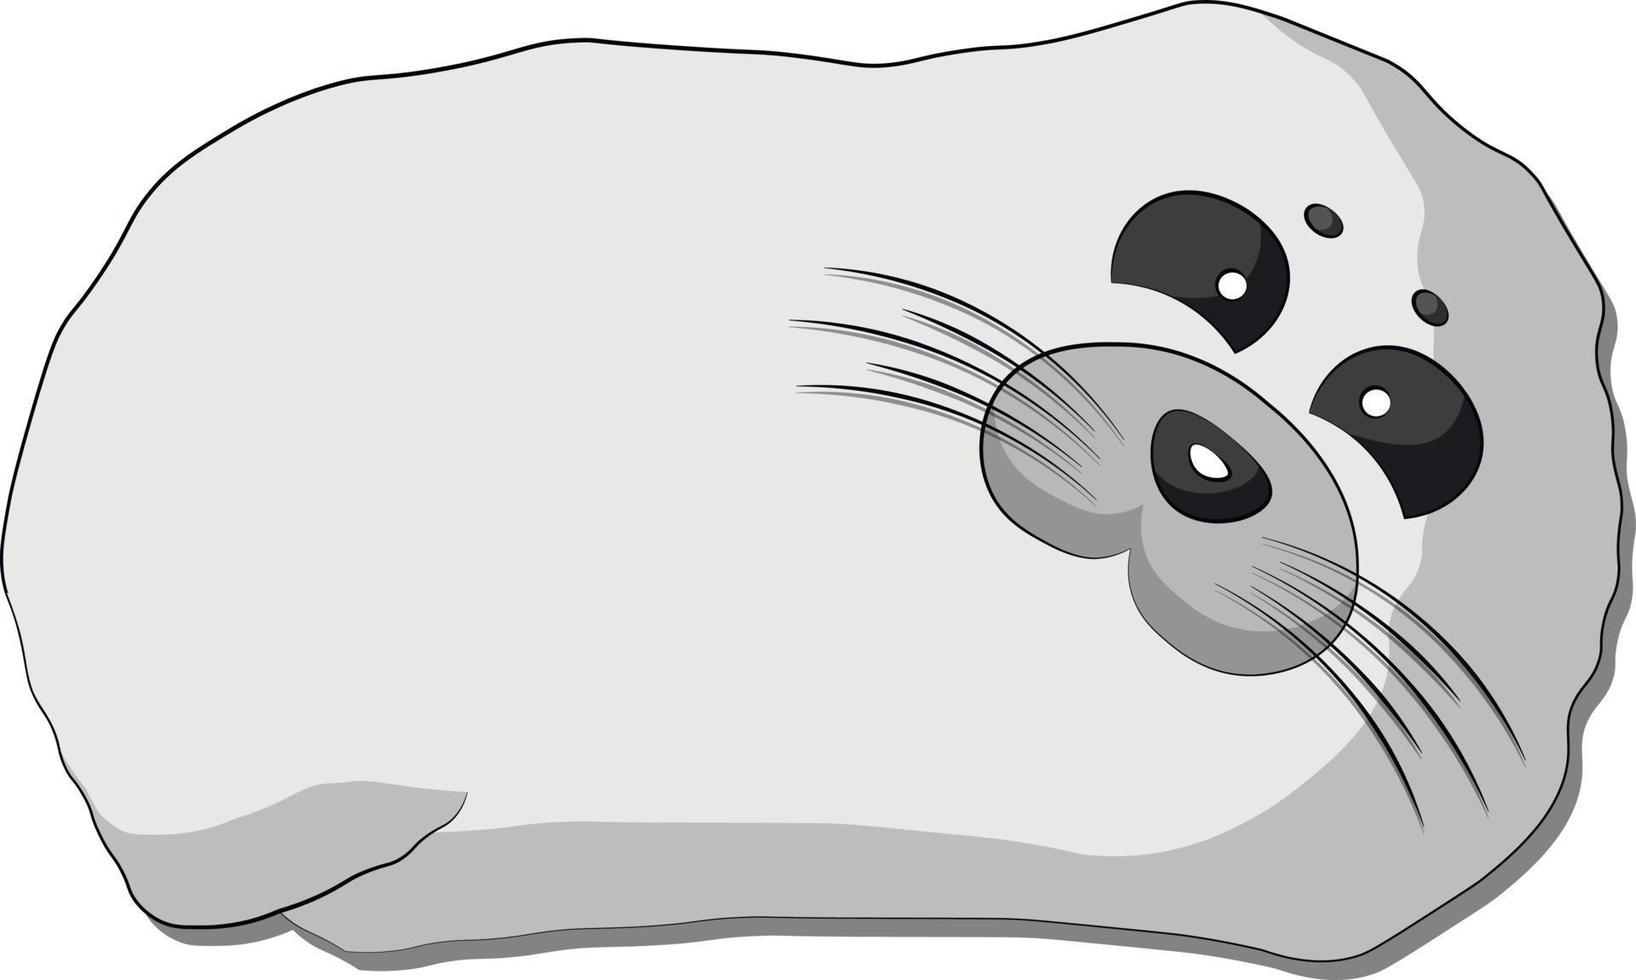 Cute cartoon Seal. Draw illustration in color vector